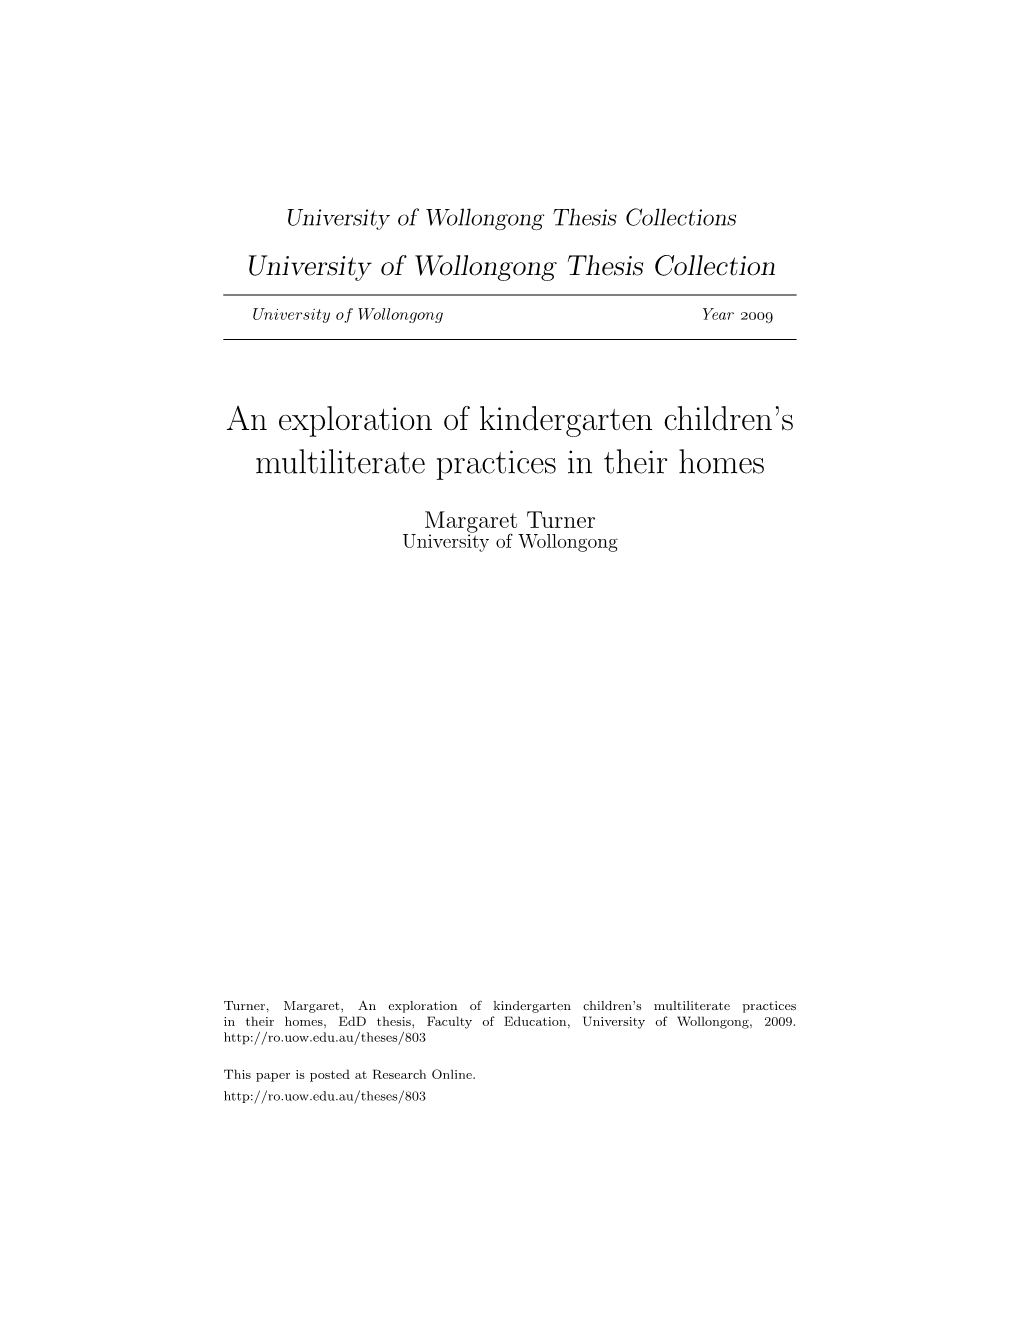 An Exploration of Kindergarten Children's Multiliterate Practices In